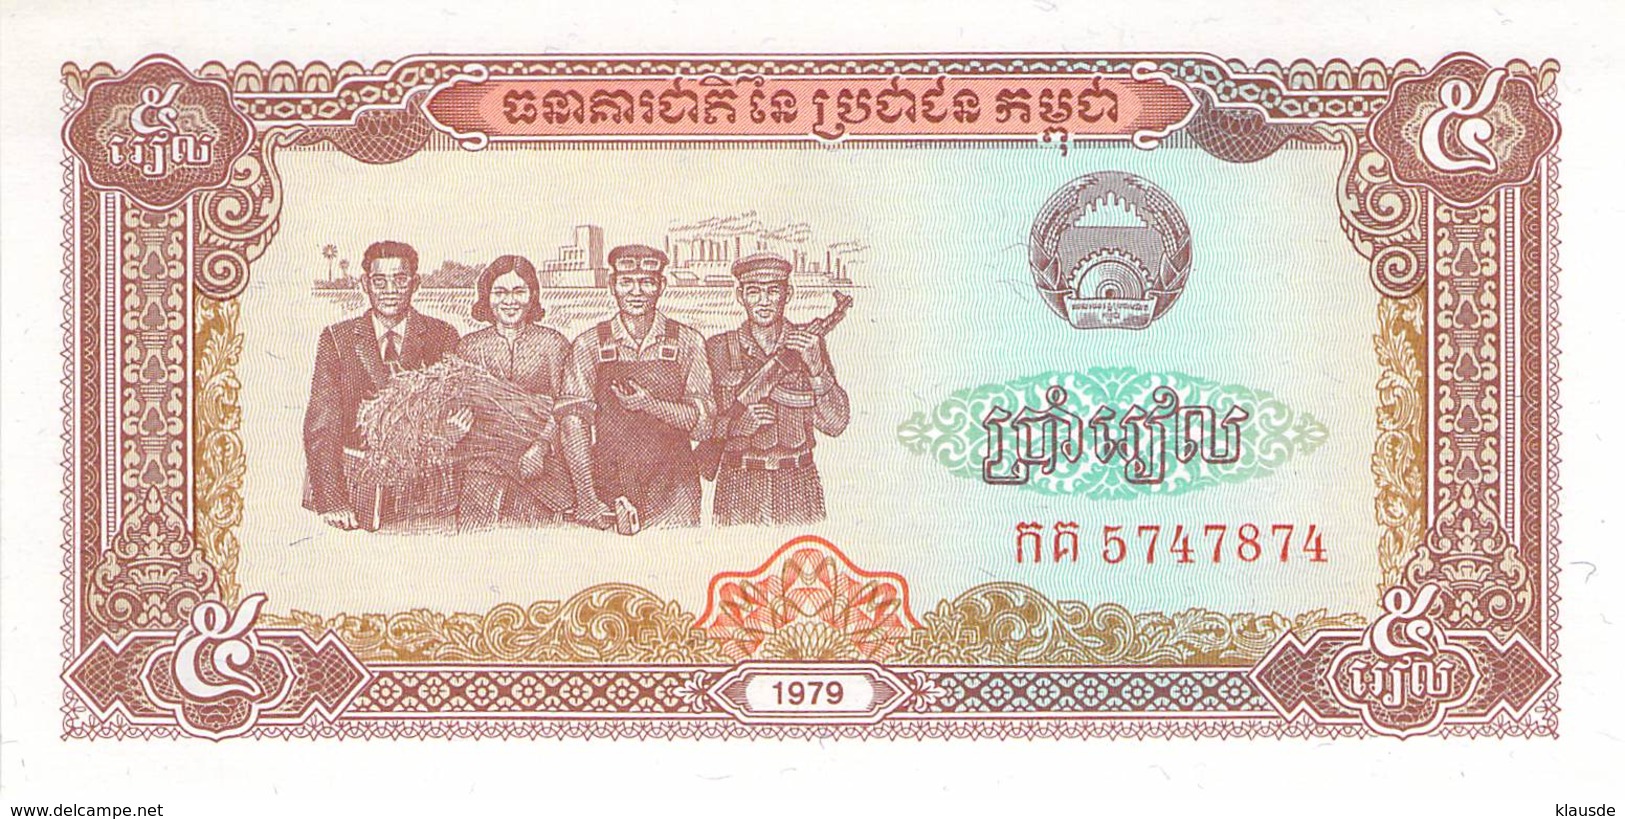 5 Riels Banknote Kambodscha - Cambodja